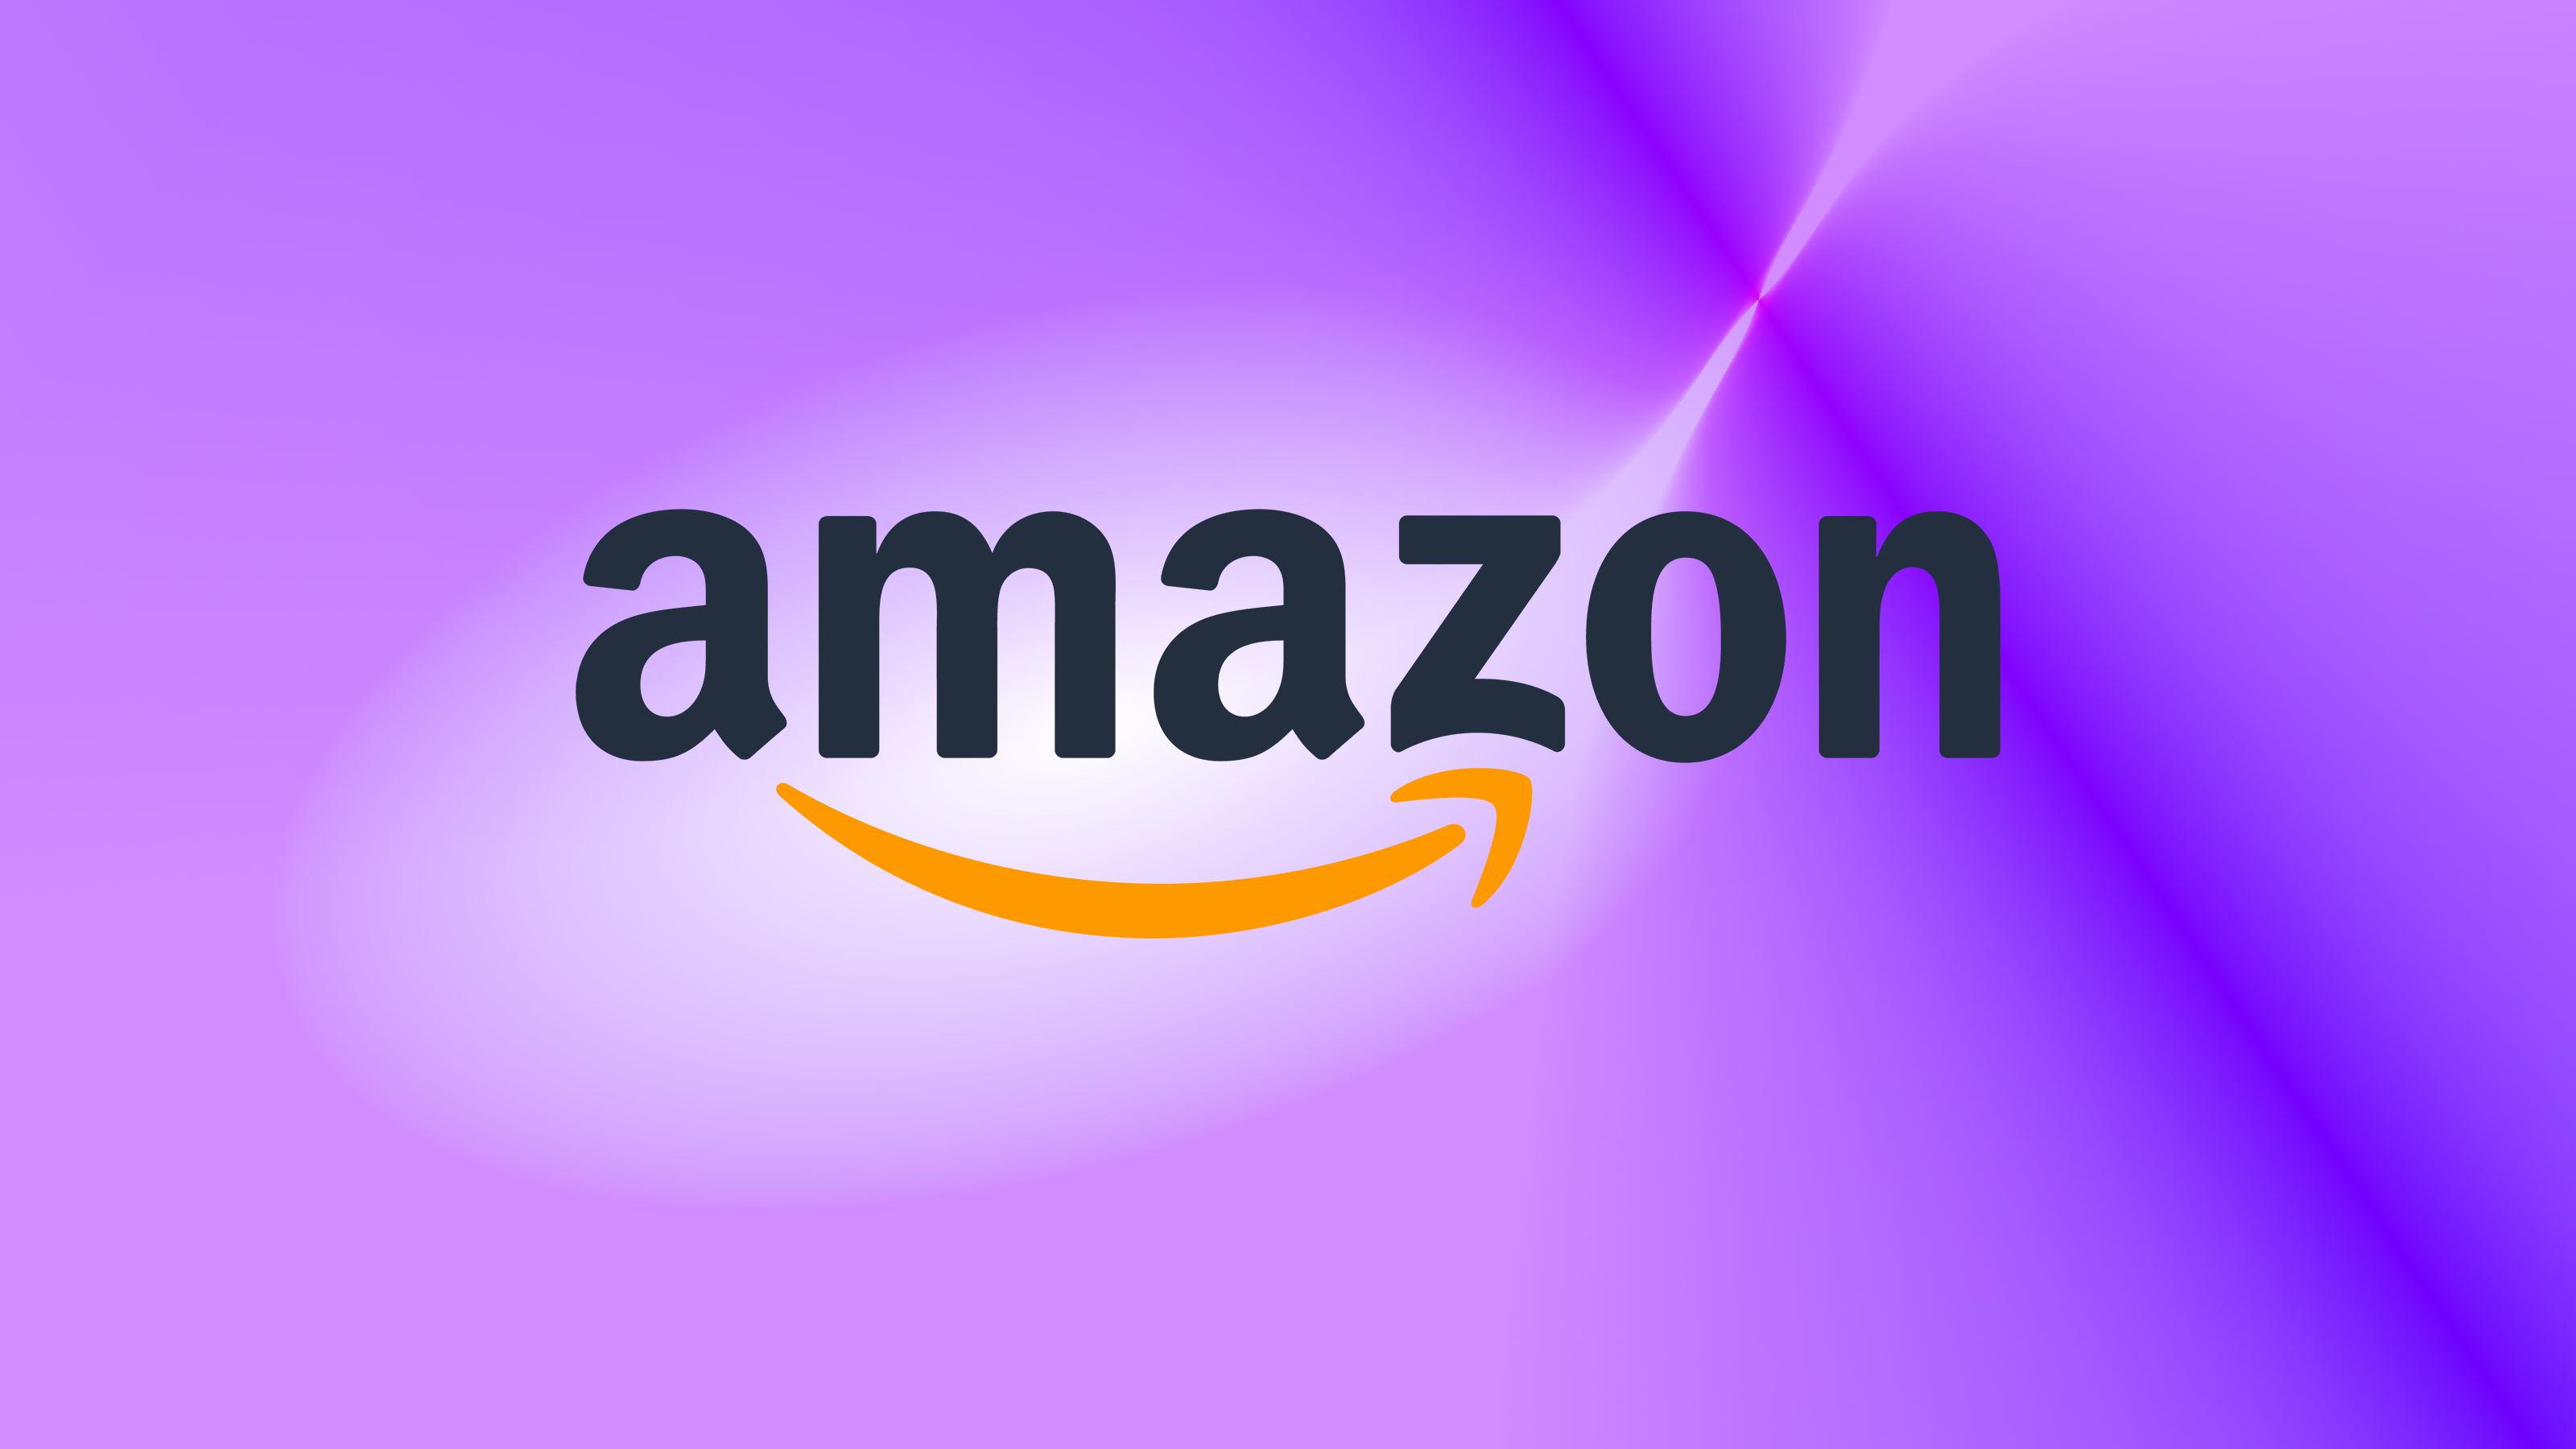 O logotipo do sorriso da Amazon contra um fundo roxo